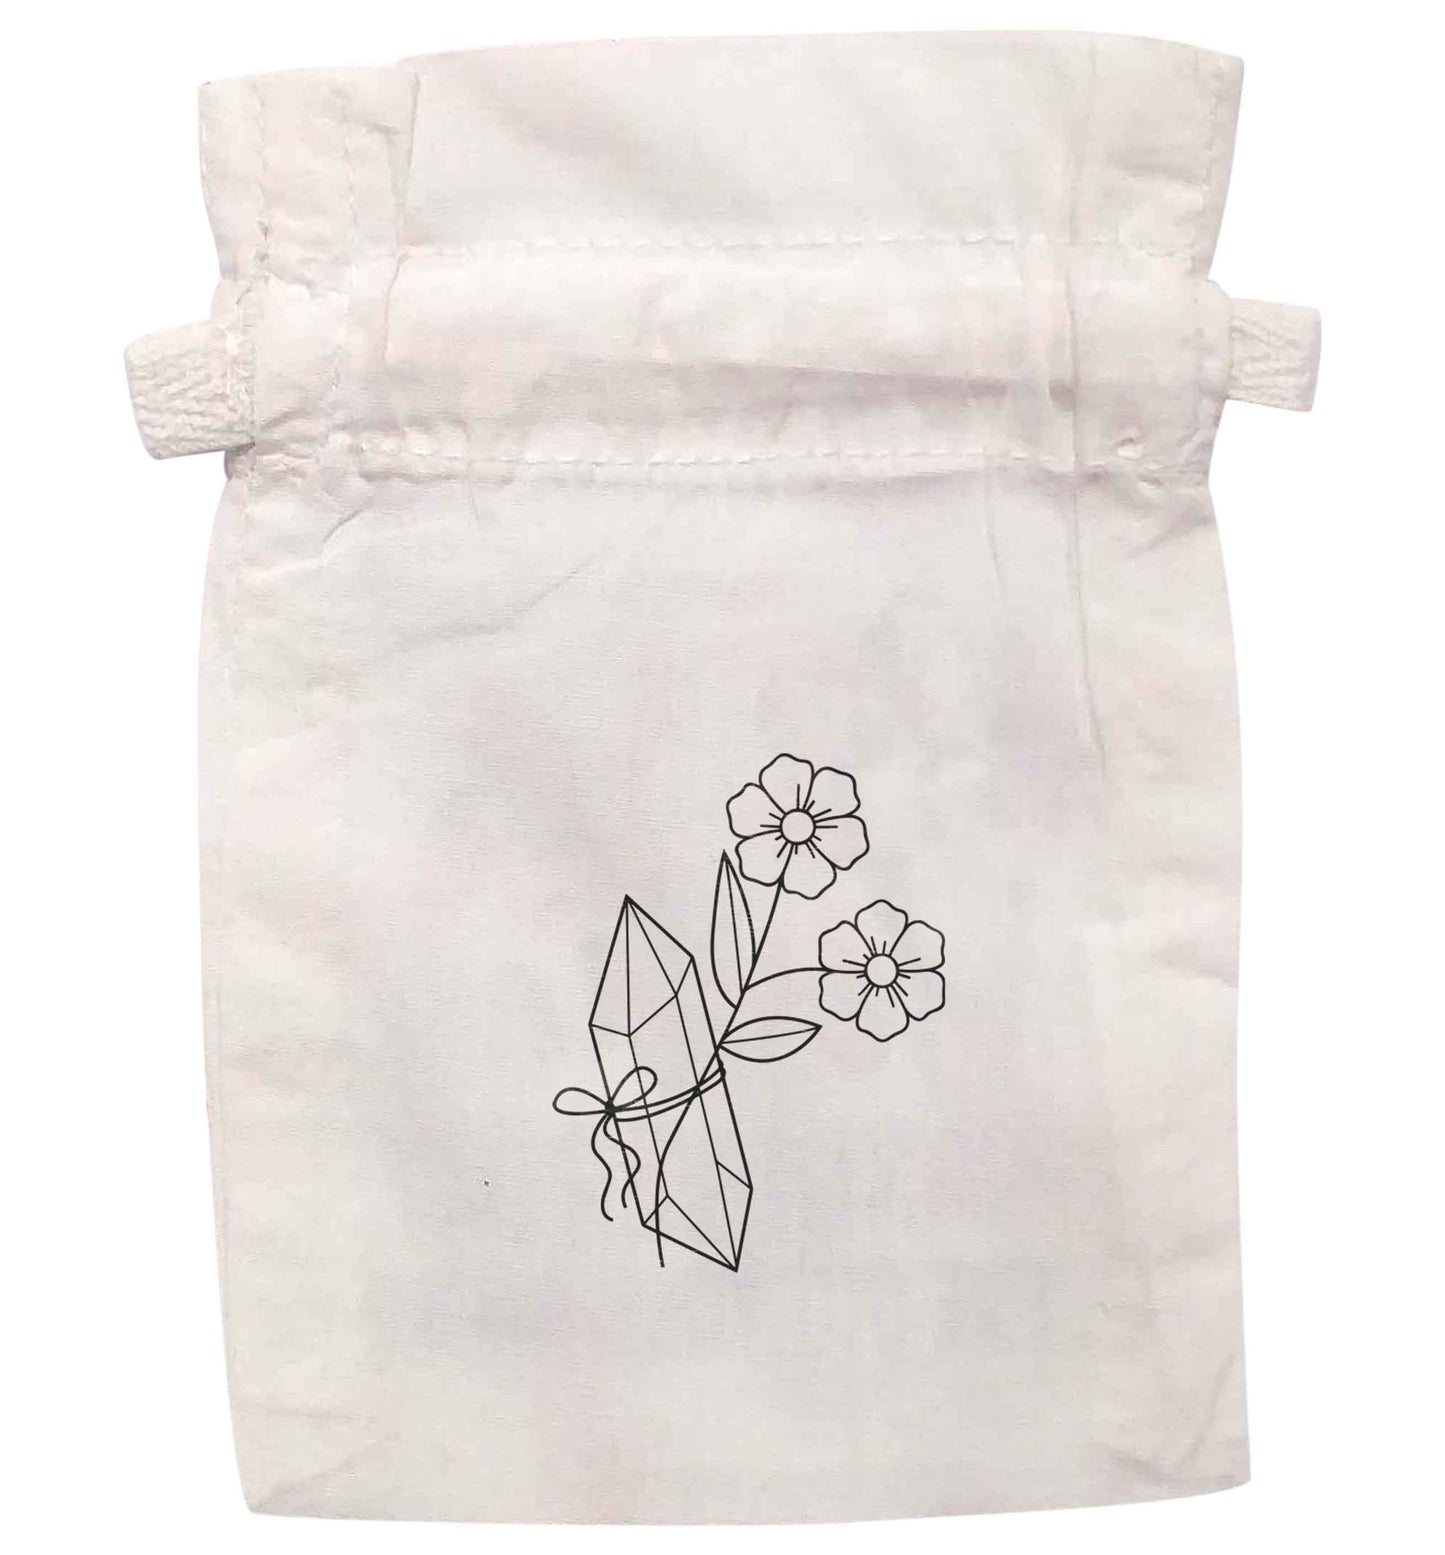 Crystal flower illustration | XS - L | Pouch / Drawstring bag / Sack | Organic Cotton | Bulk discounts available!